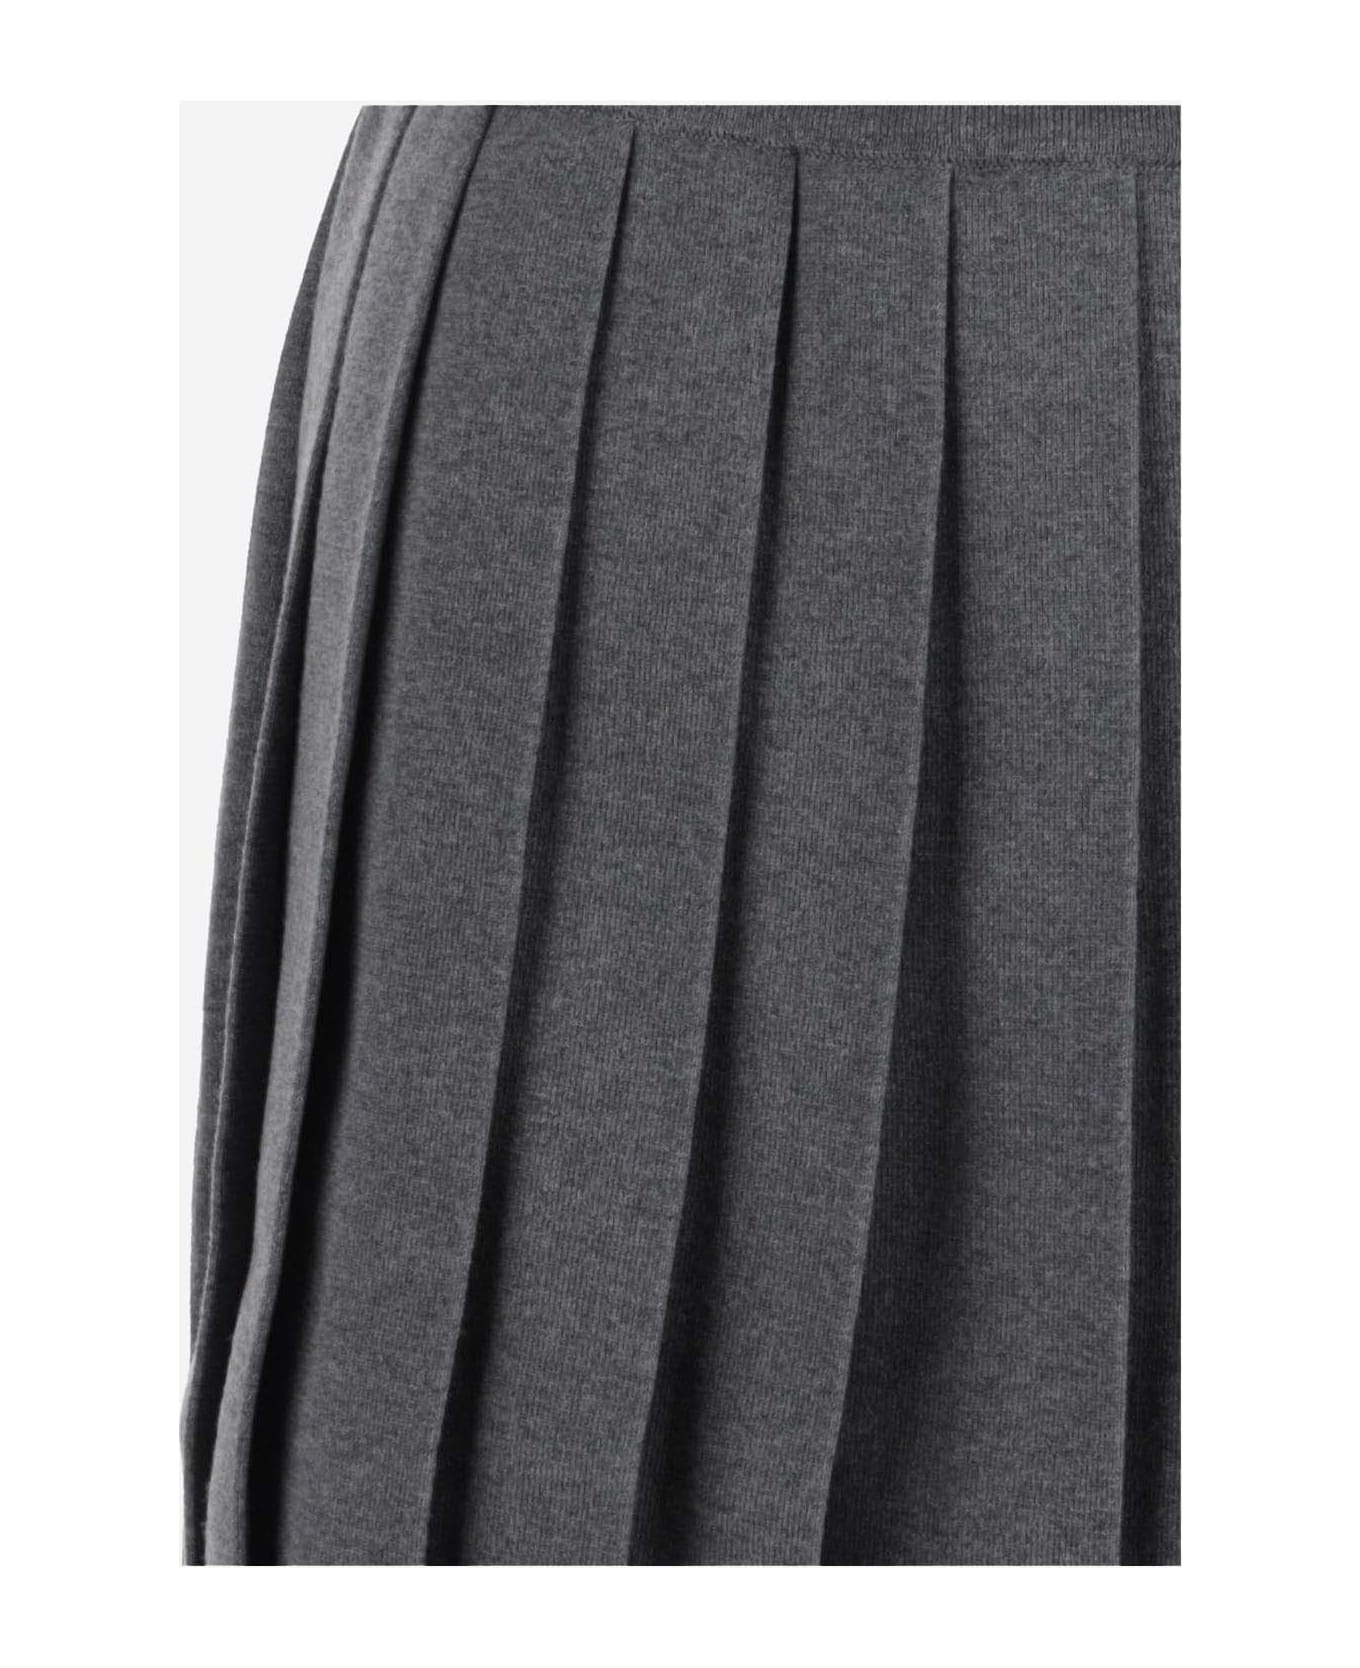 Thom Browne 'full Needle Pleated Mini' Wool Blend Skirt - GREY スカート